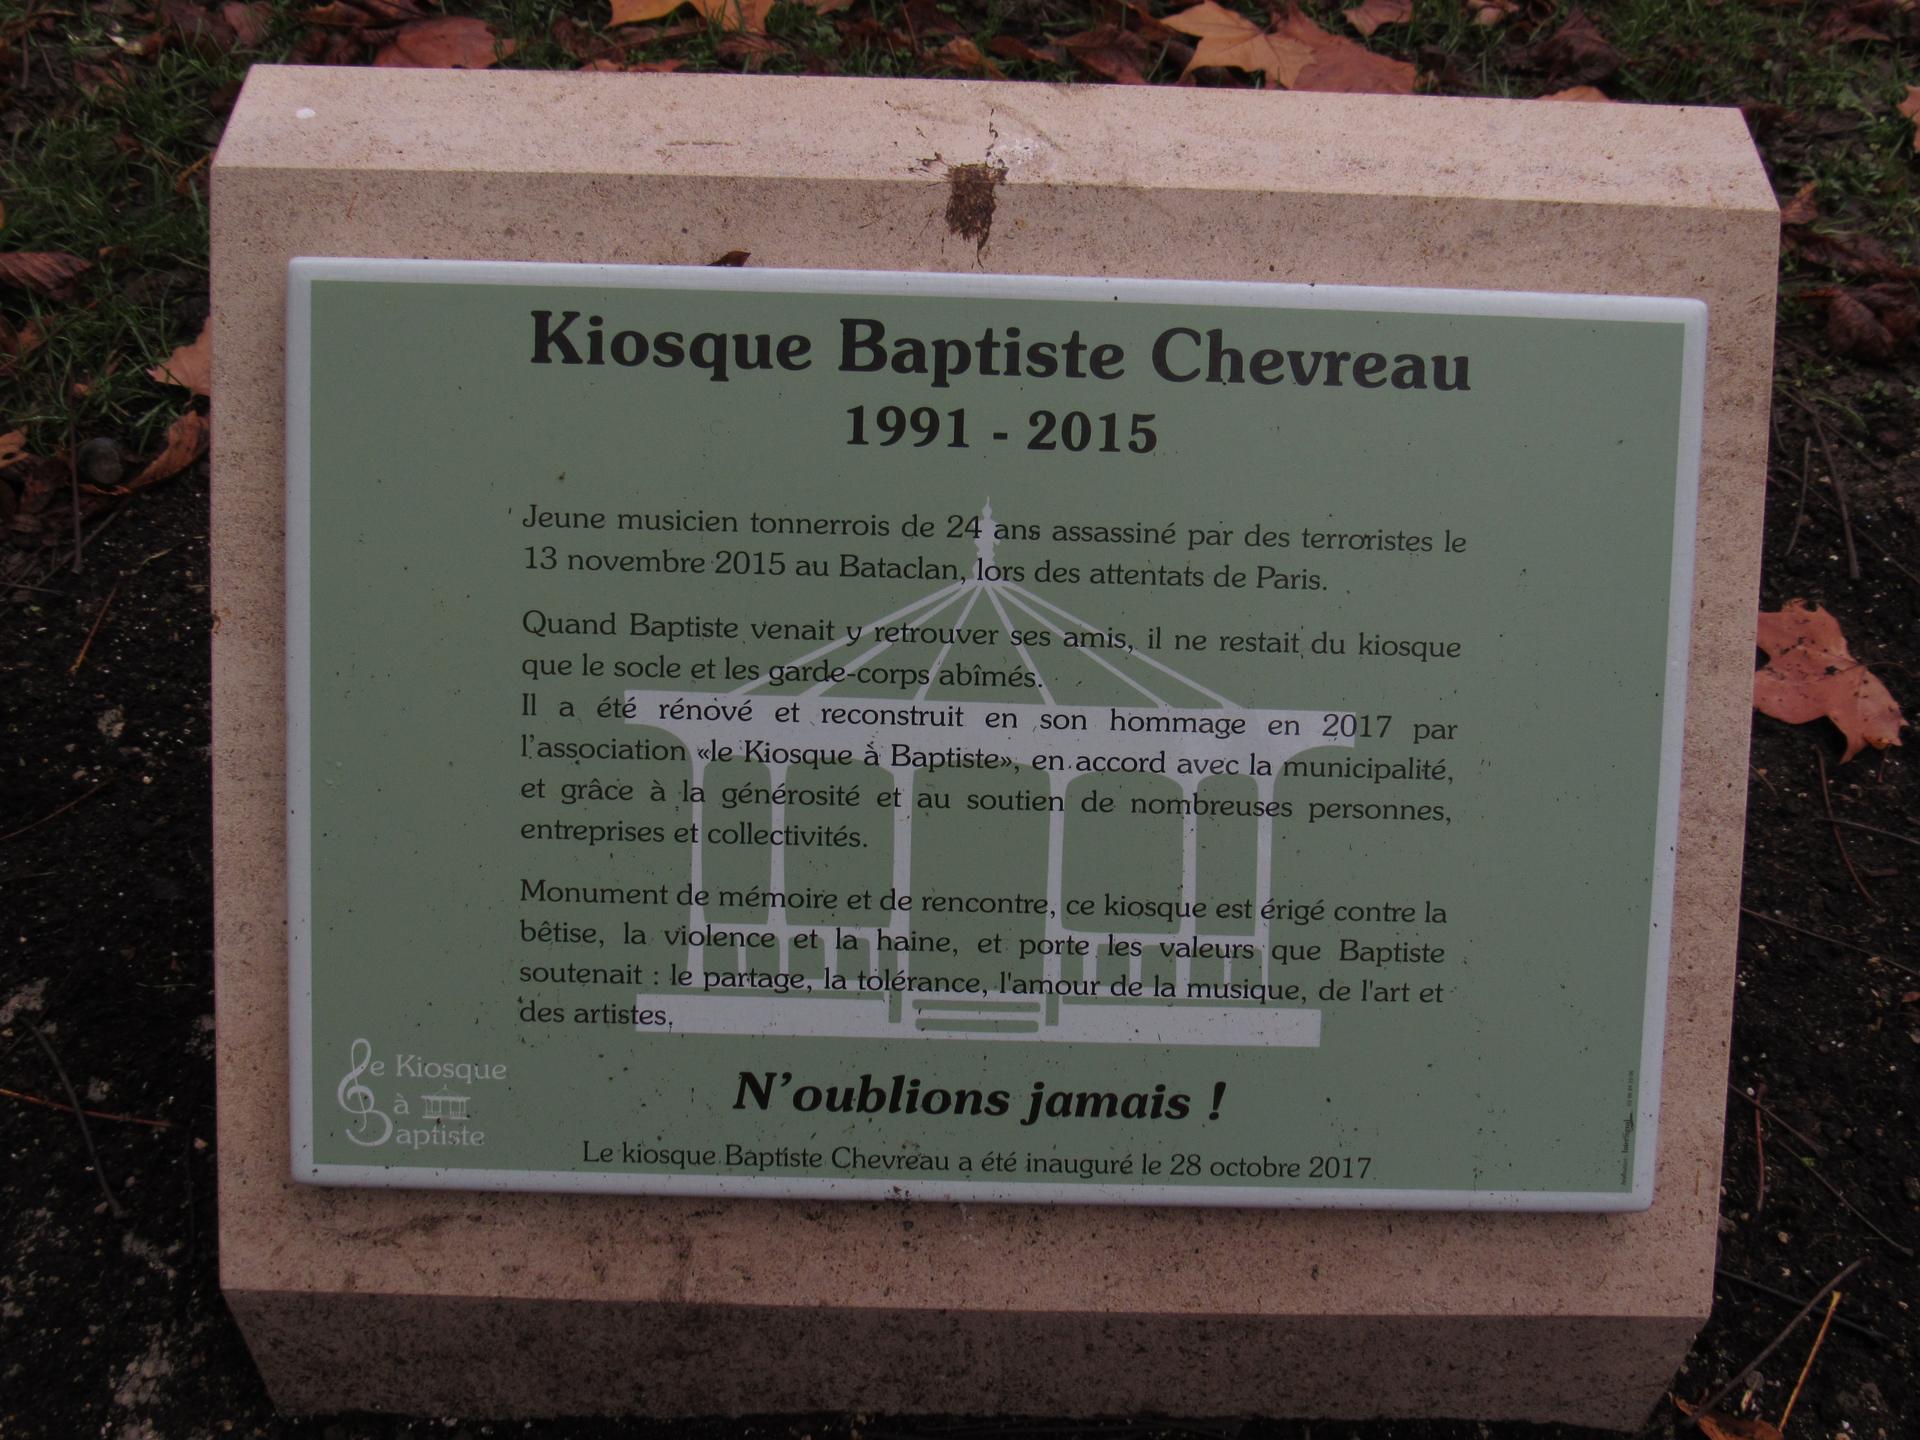 A memorial plaque lists values Chevreau believed in: 